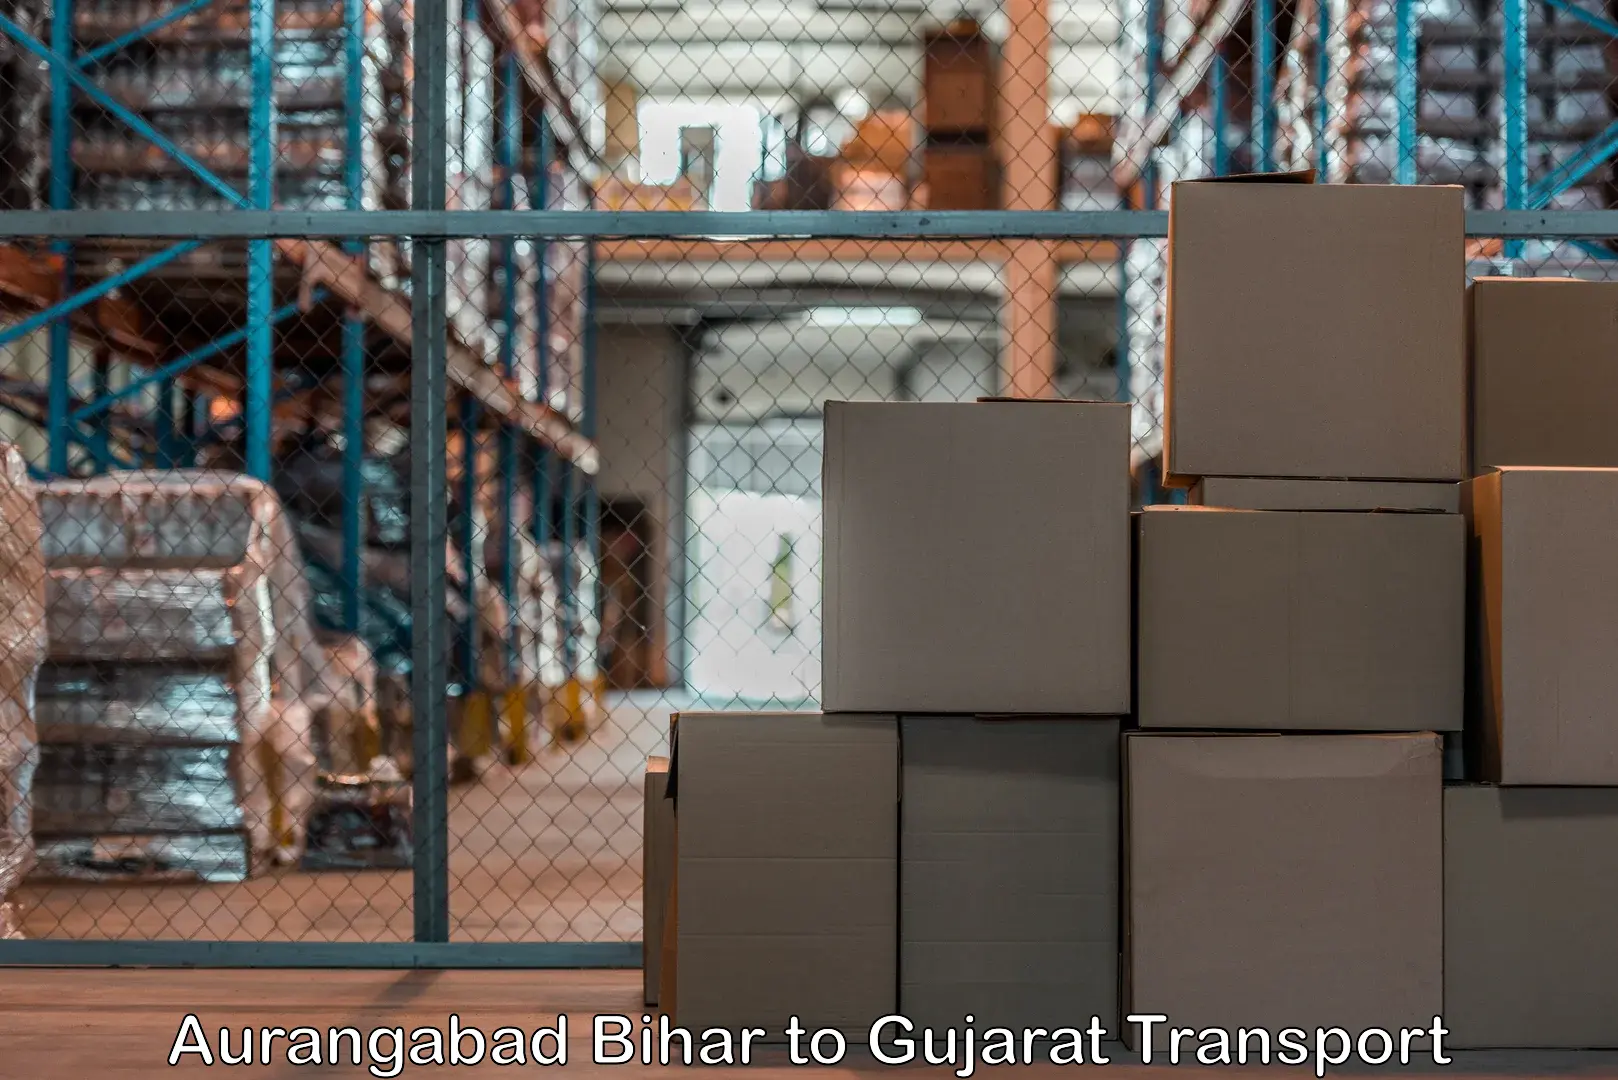 Truck transport companies in India Aurangabad Bihar to Palitana